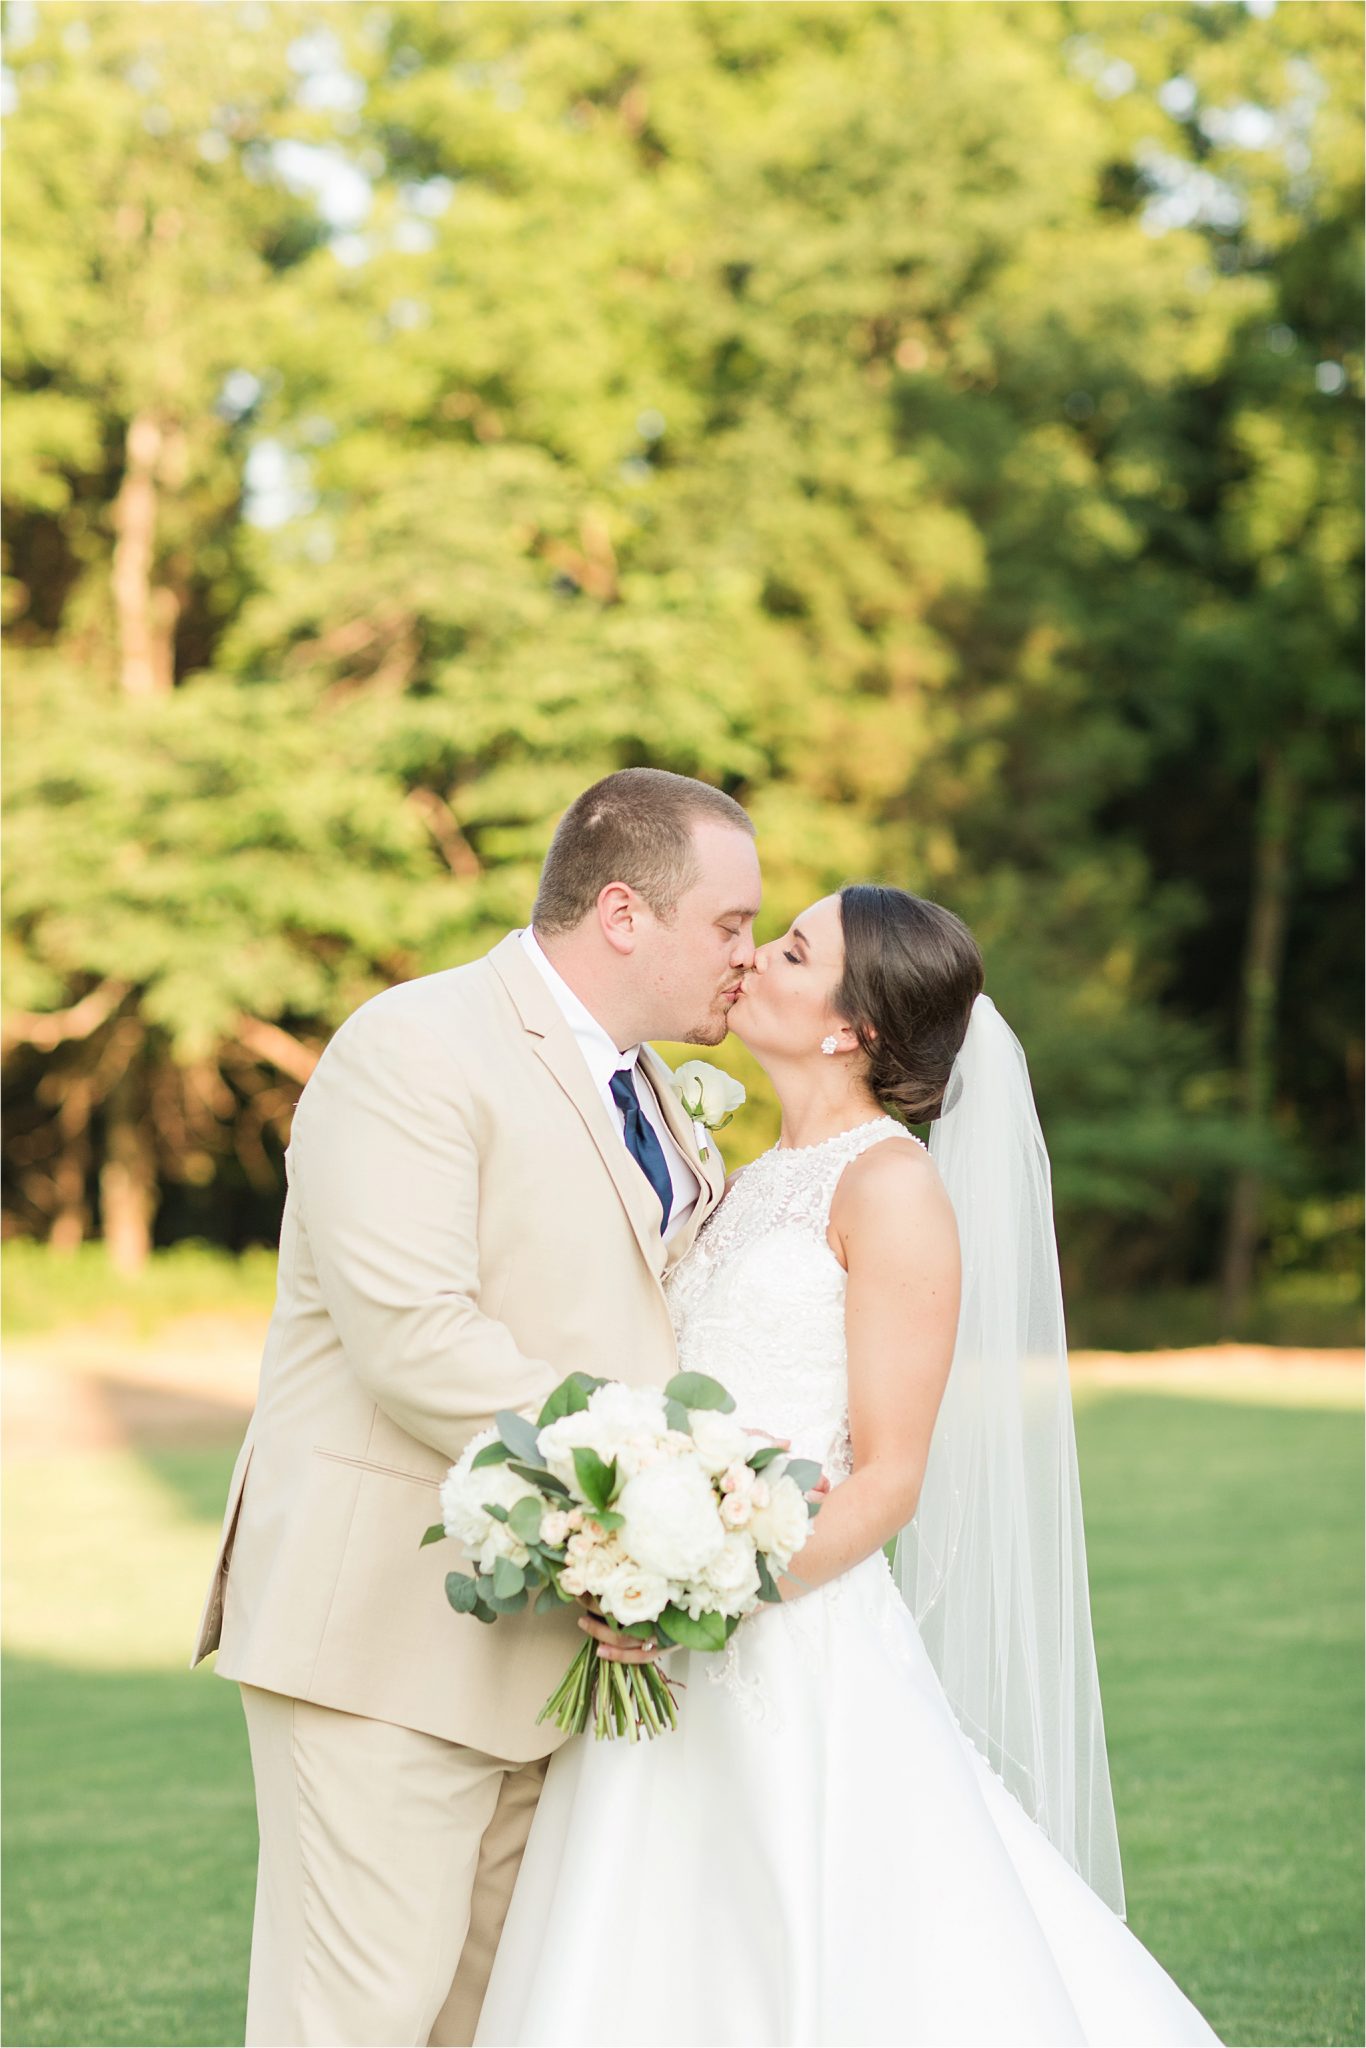 Sonnet House, Birmingham Alabama Wedding Photographer, Romantic wedding shoot 